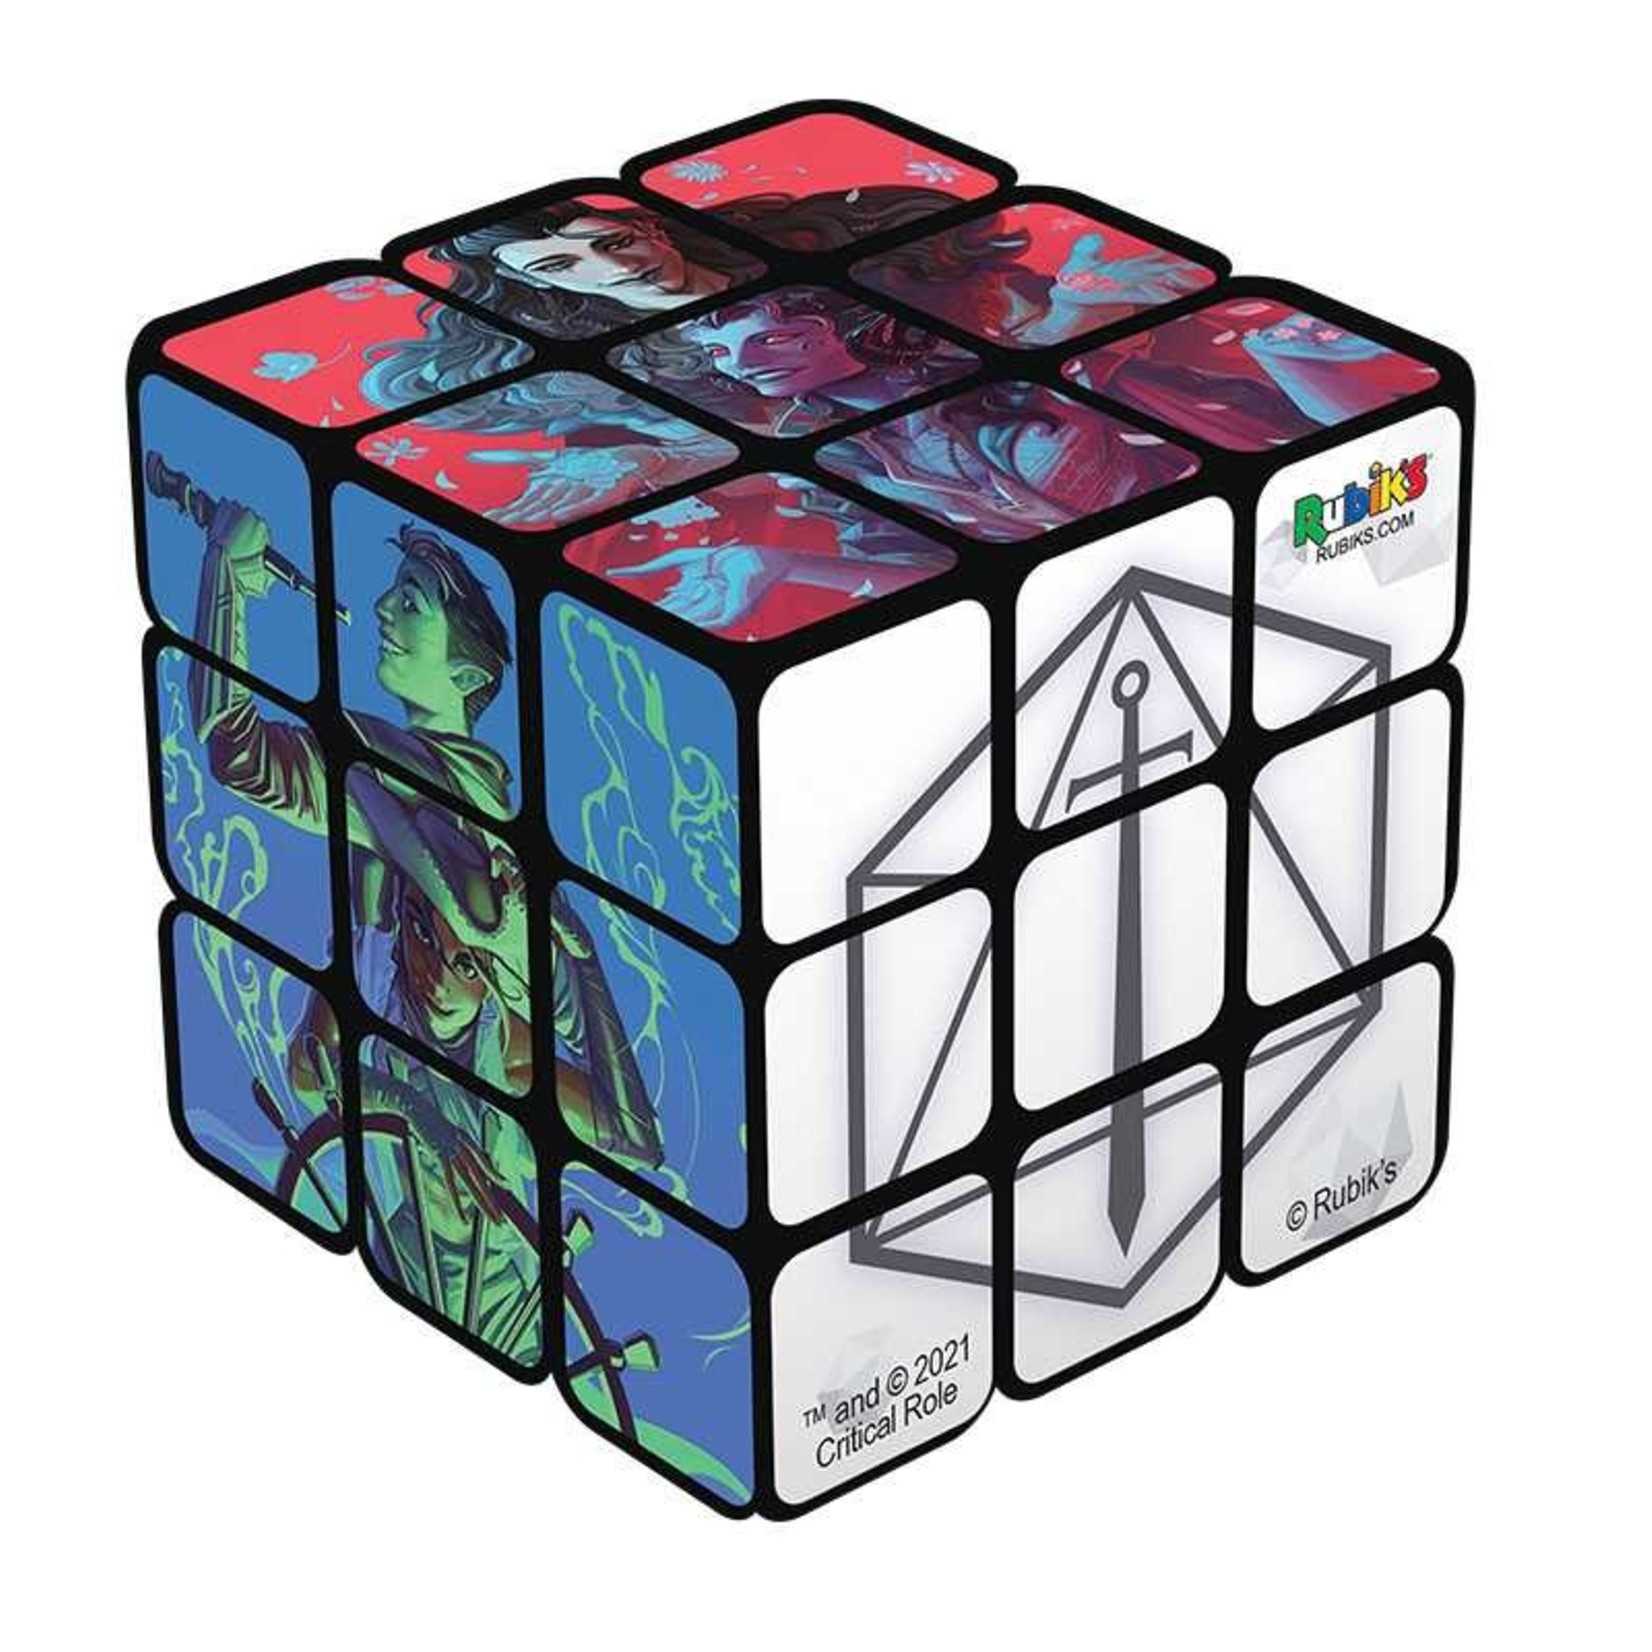 Rubik's Rubik's Cube Critical Role